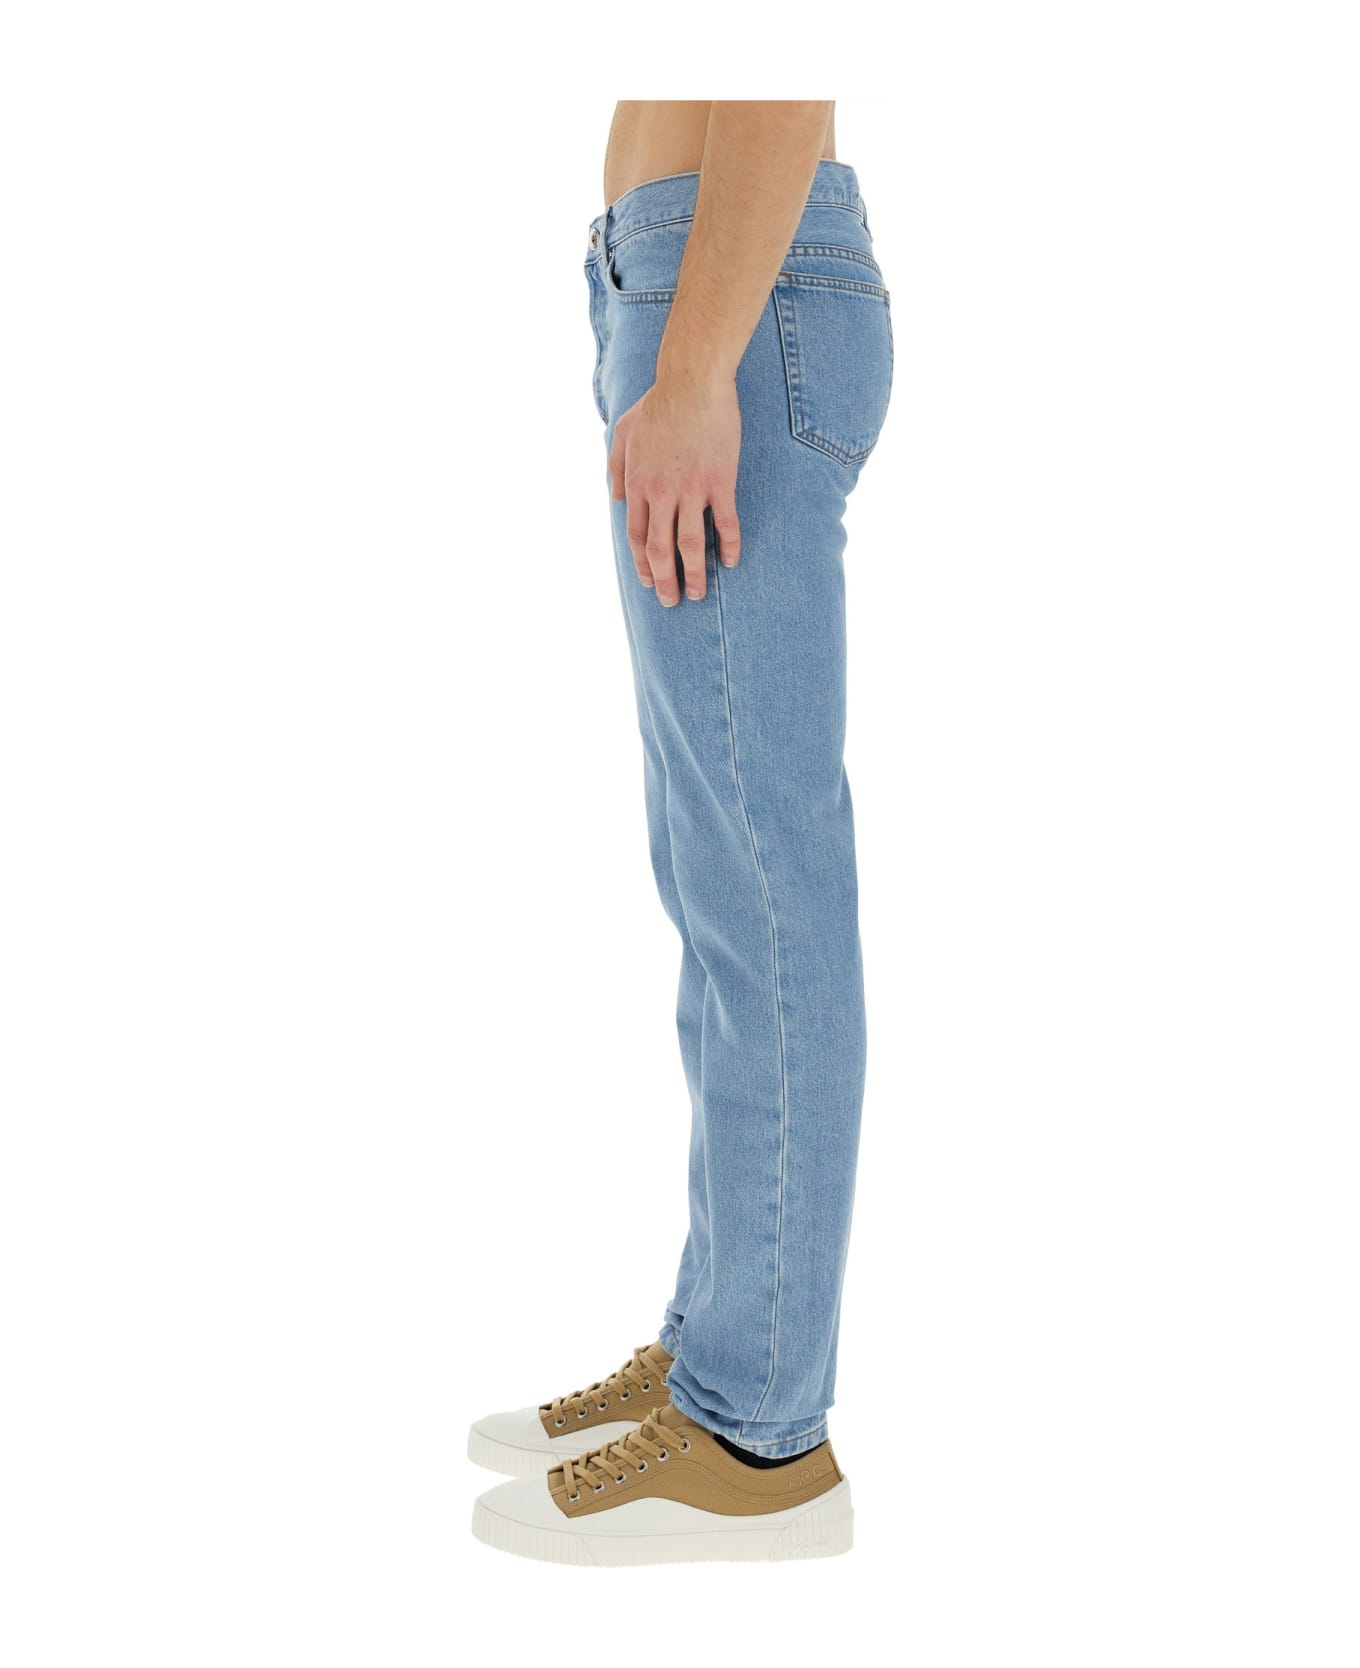 A.P.C. Petit New Standard Jeans - BLU デニム